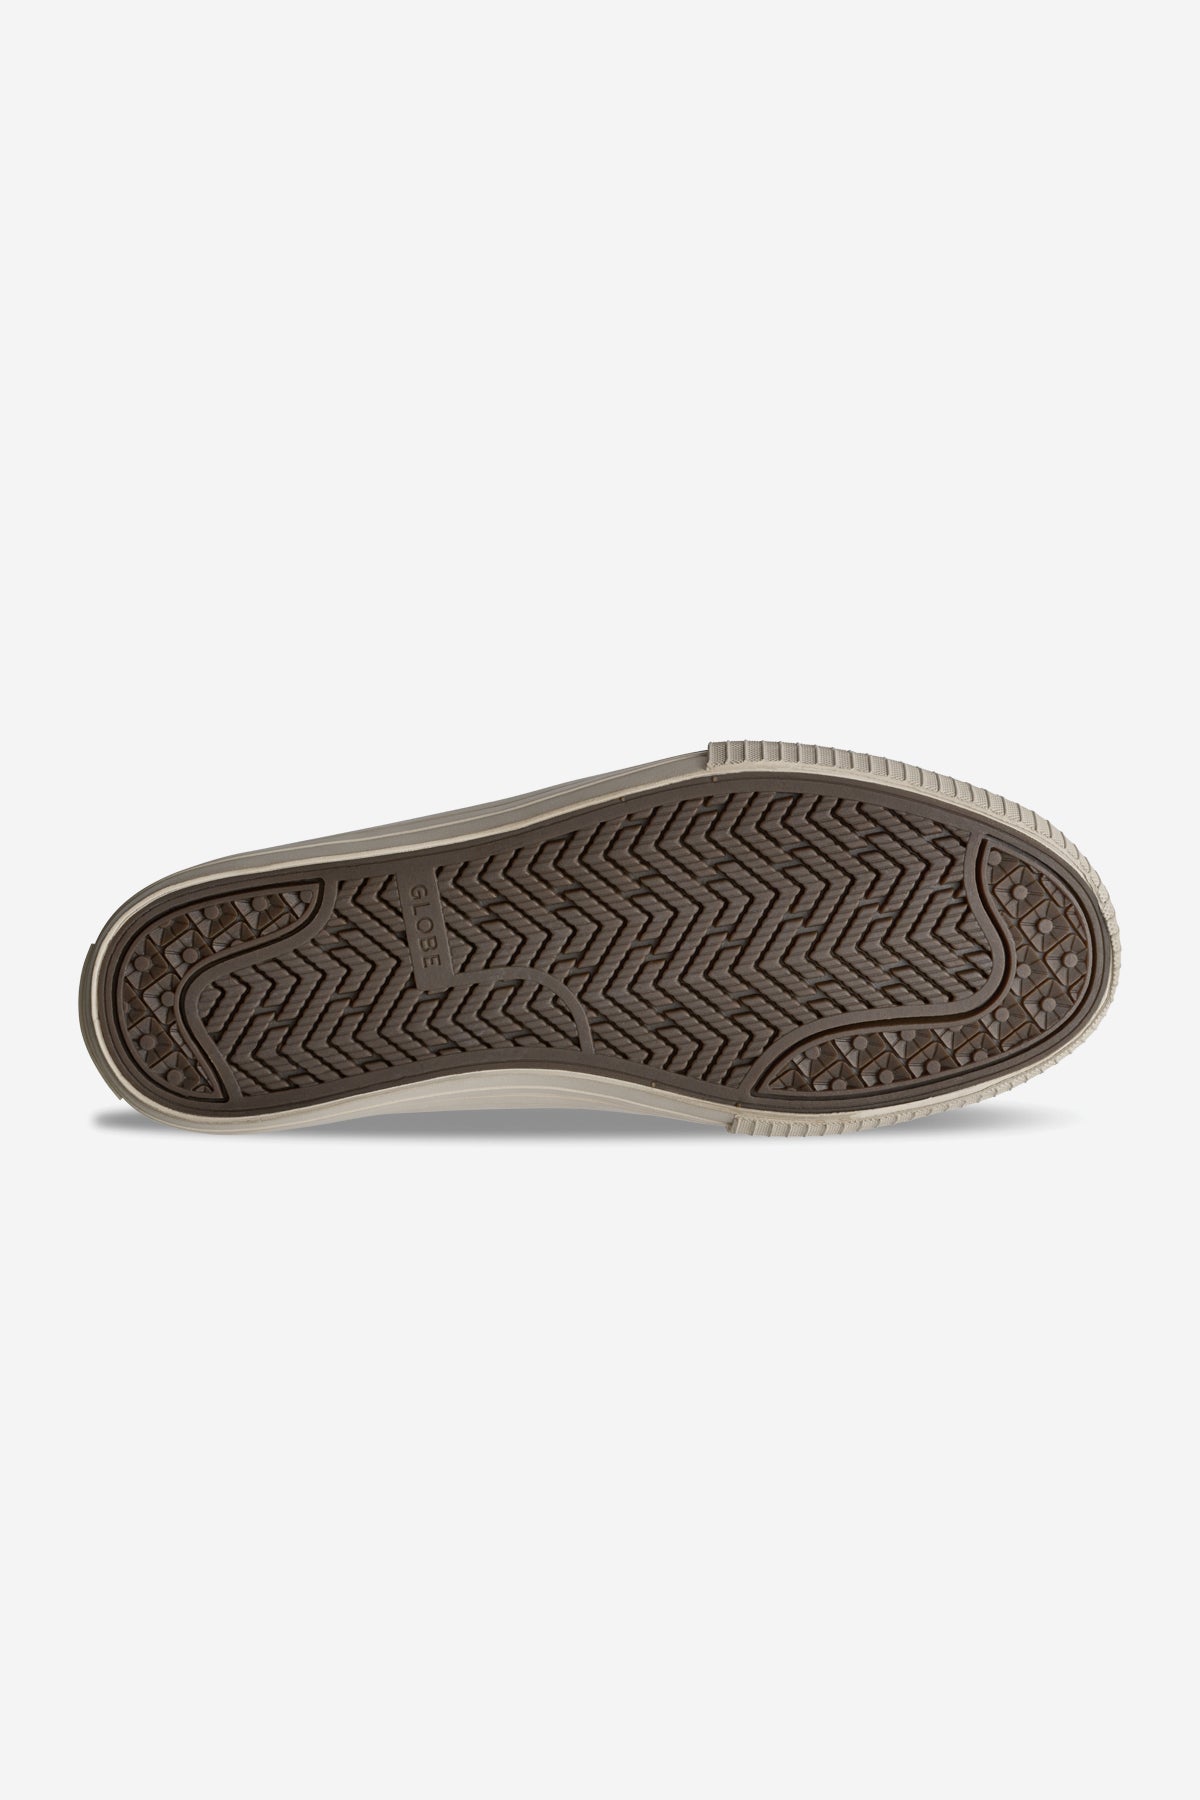 Globe - Gillette - Negro/Crema - skateboard Zapatos